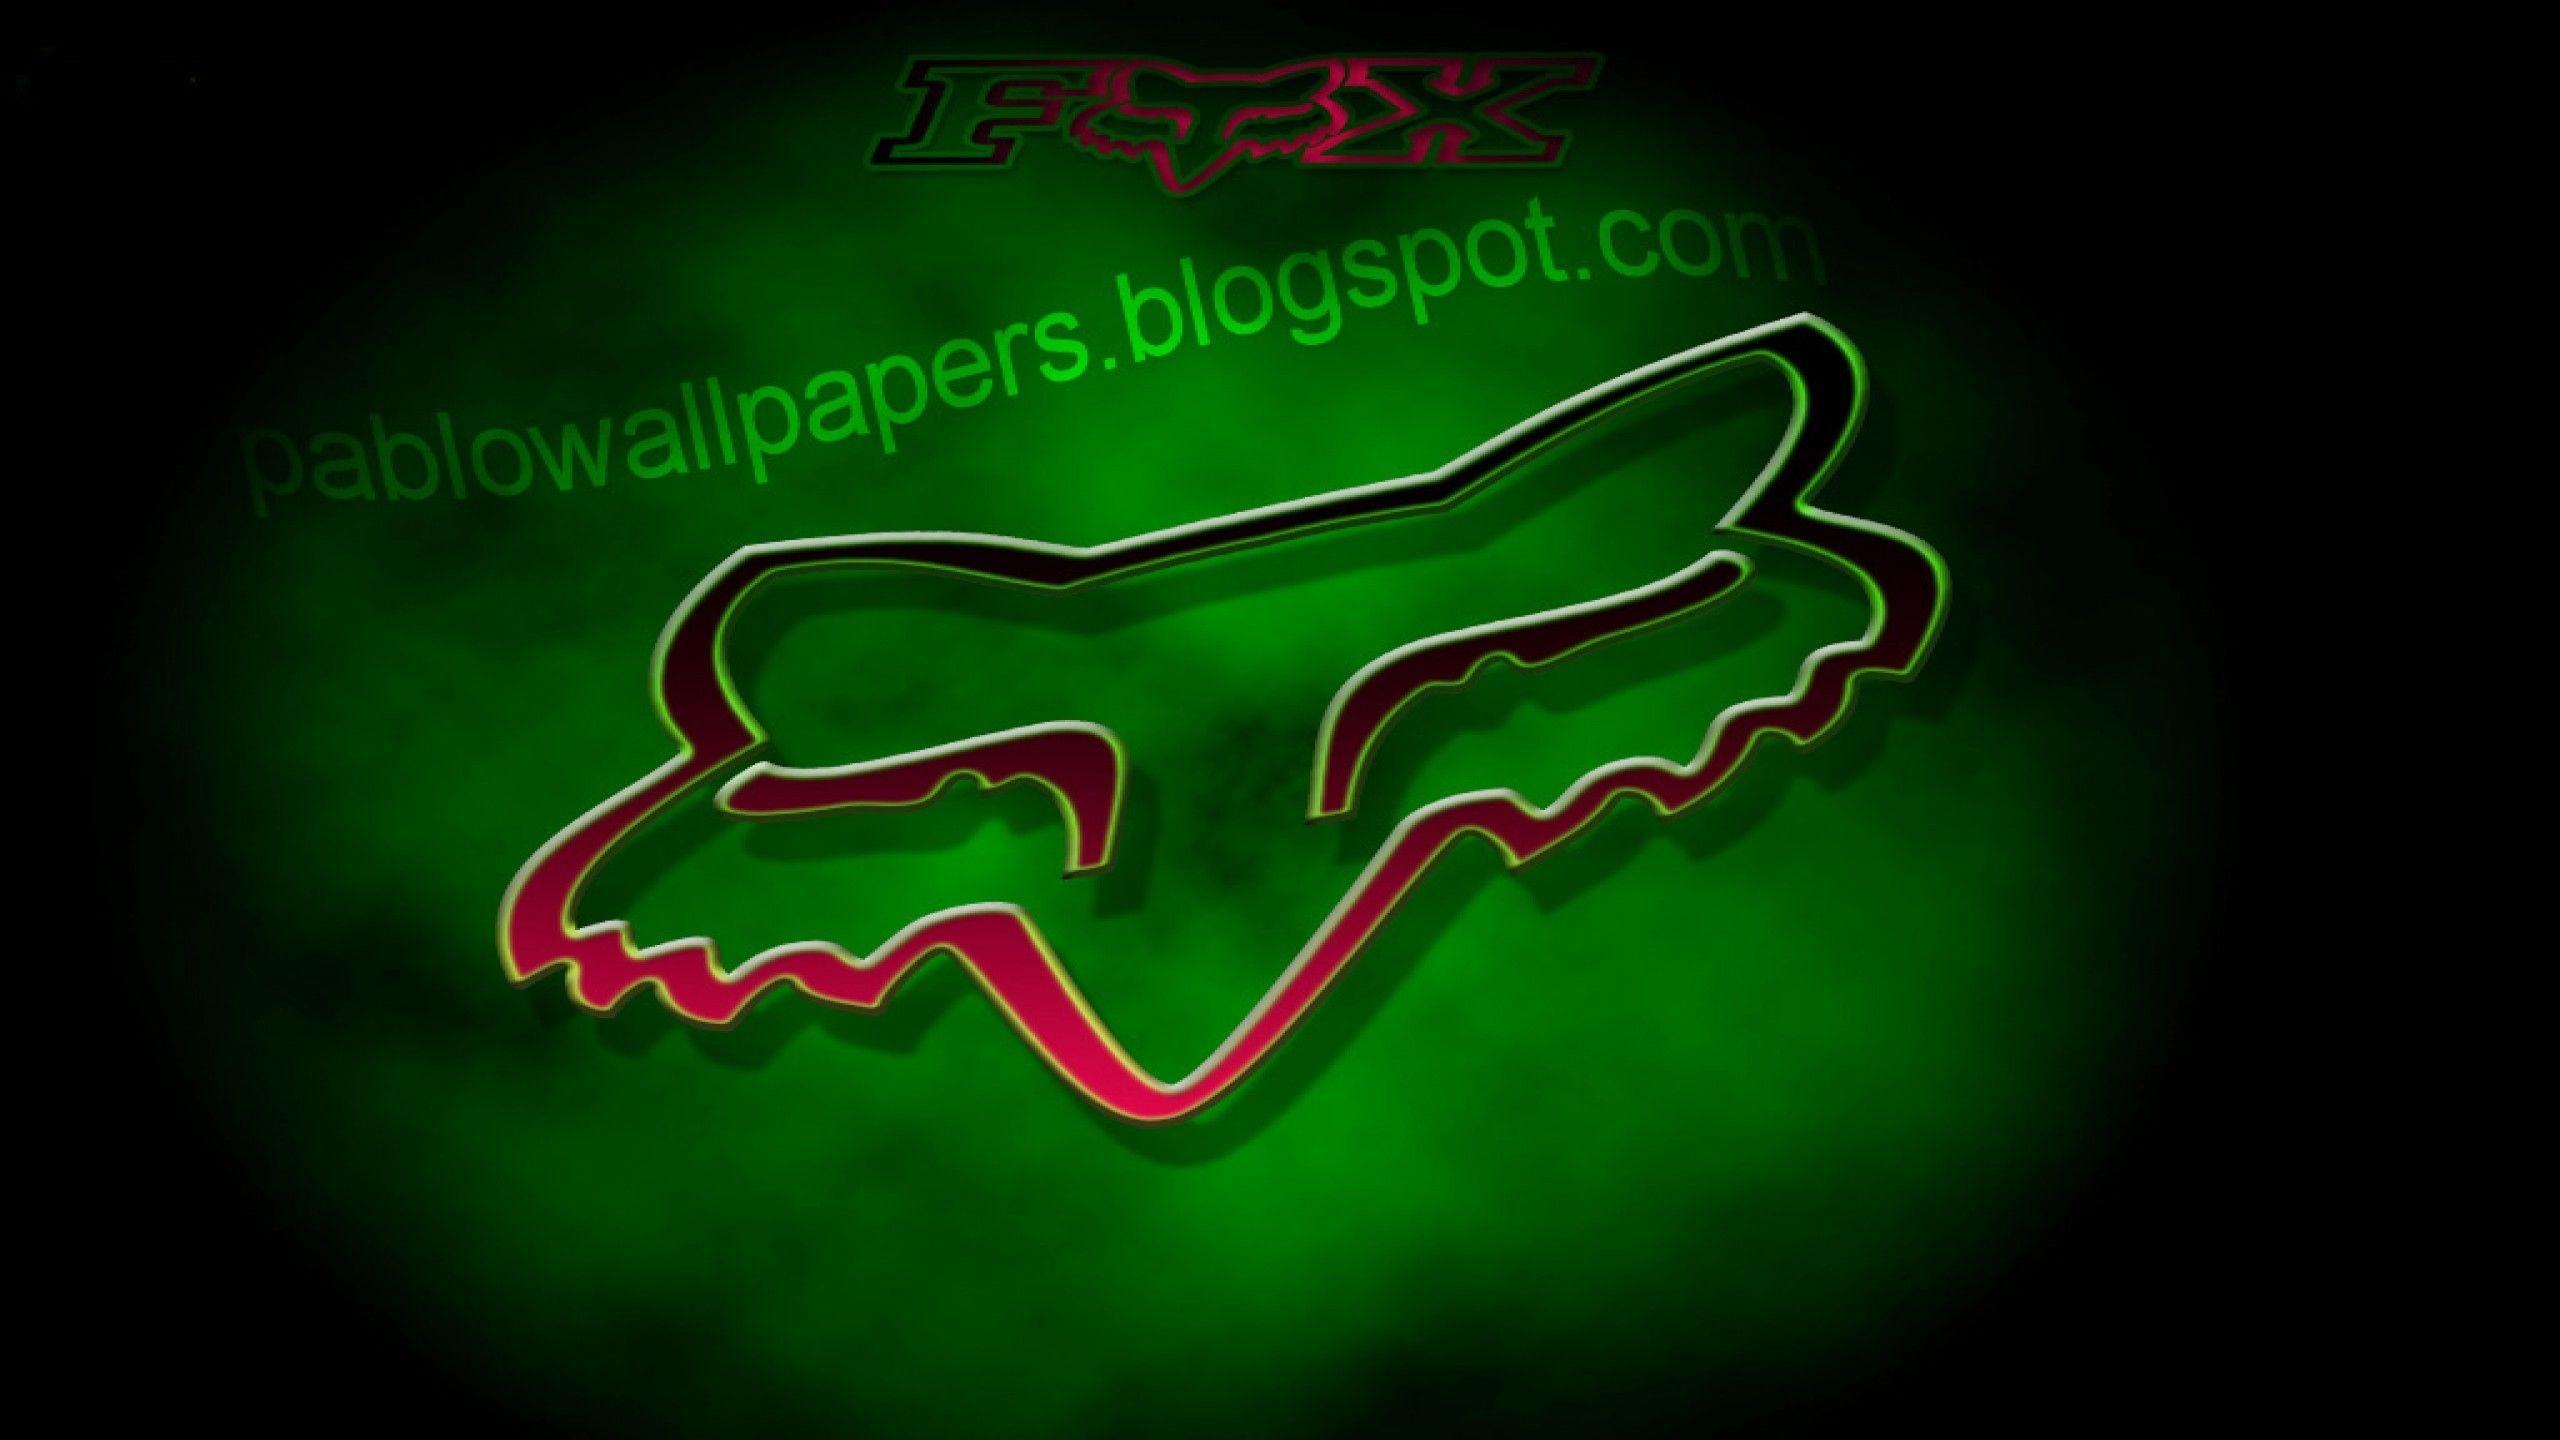 Green Fox Racing Logo - Black and green fox racing logo - digitalspace.info